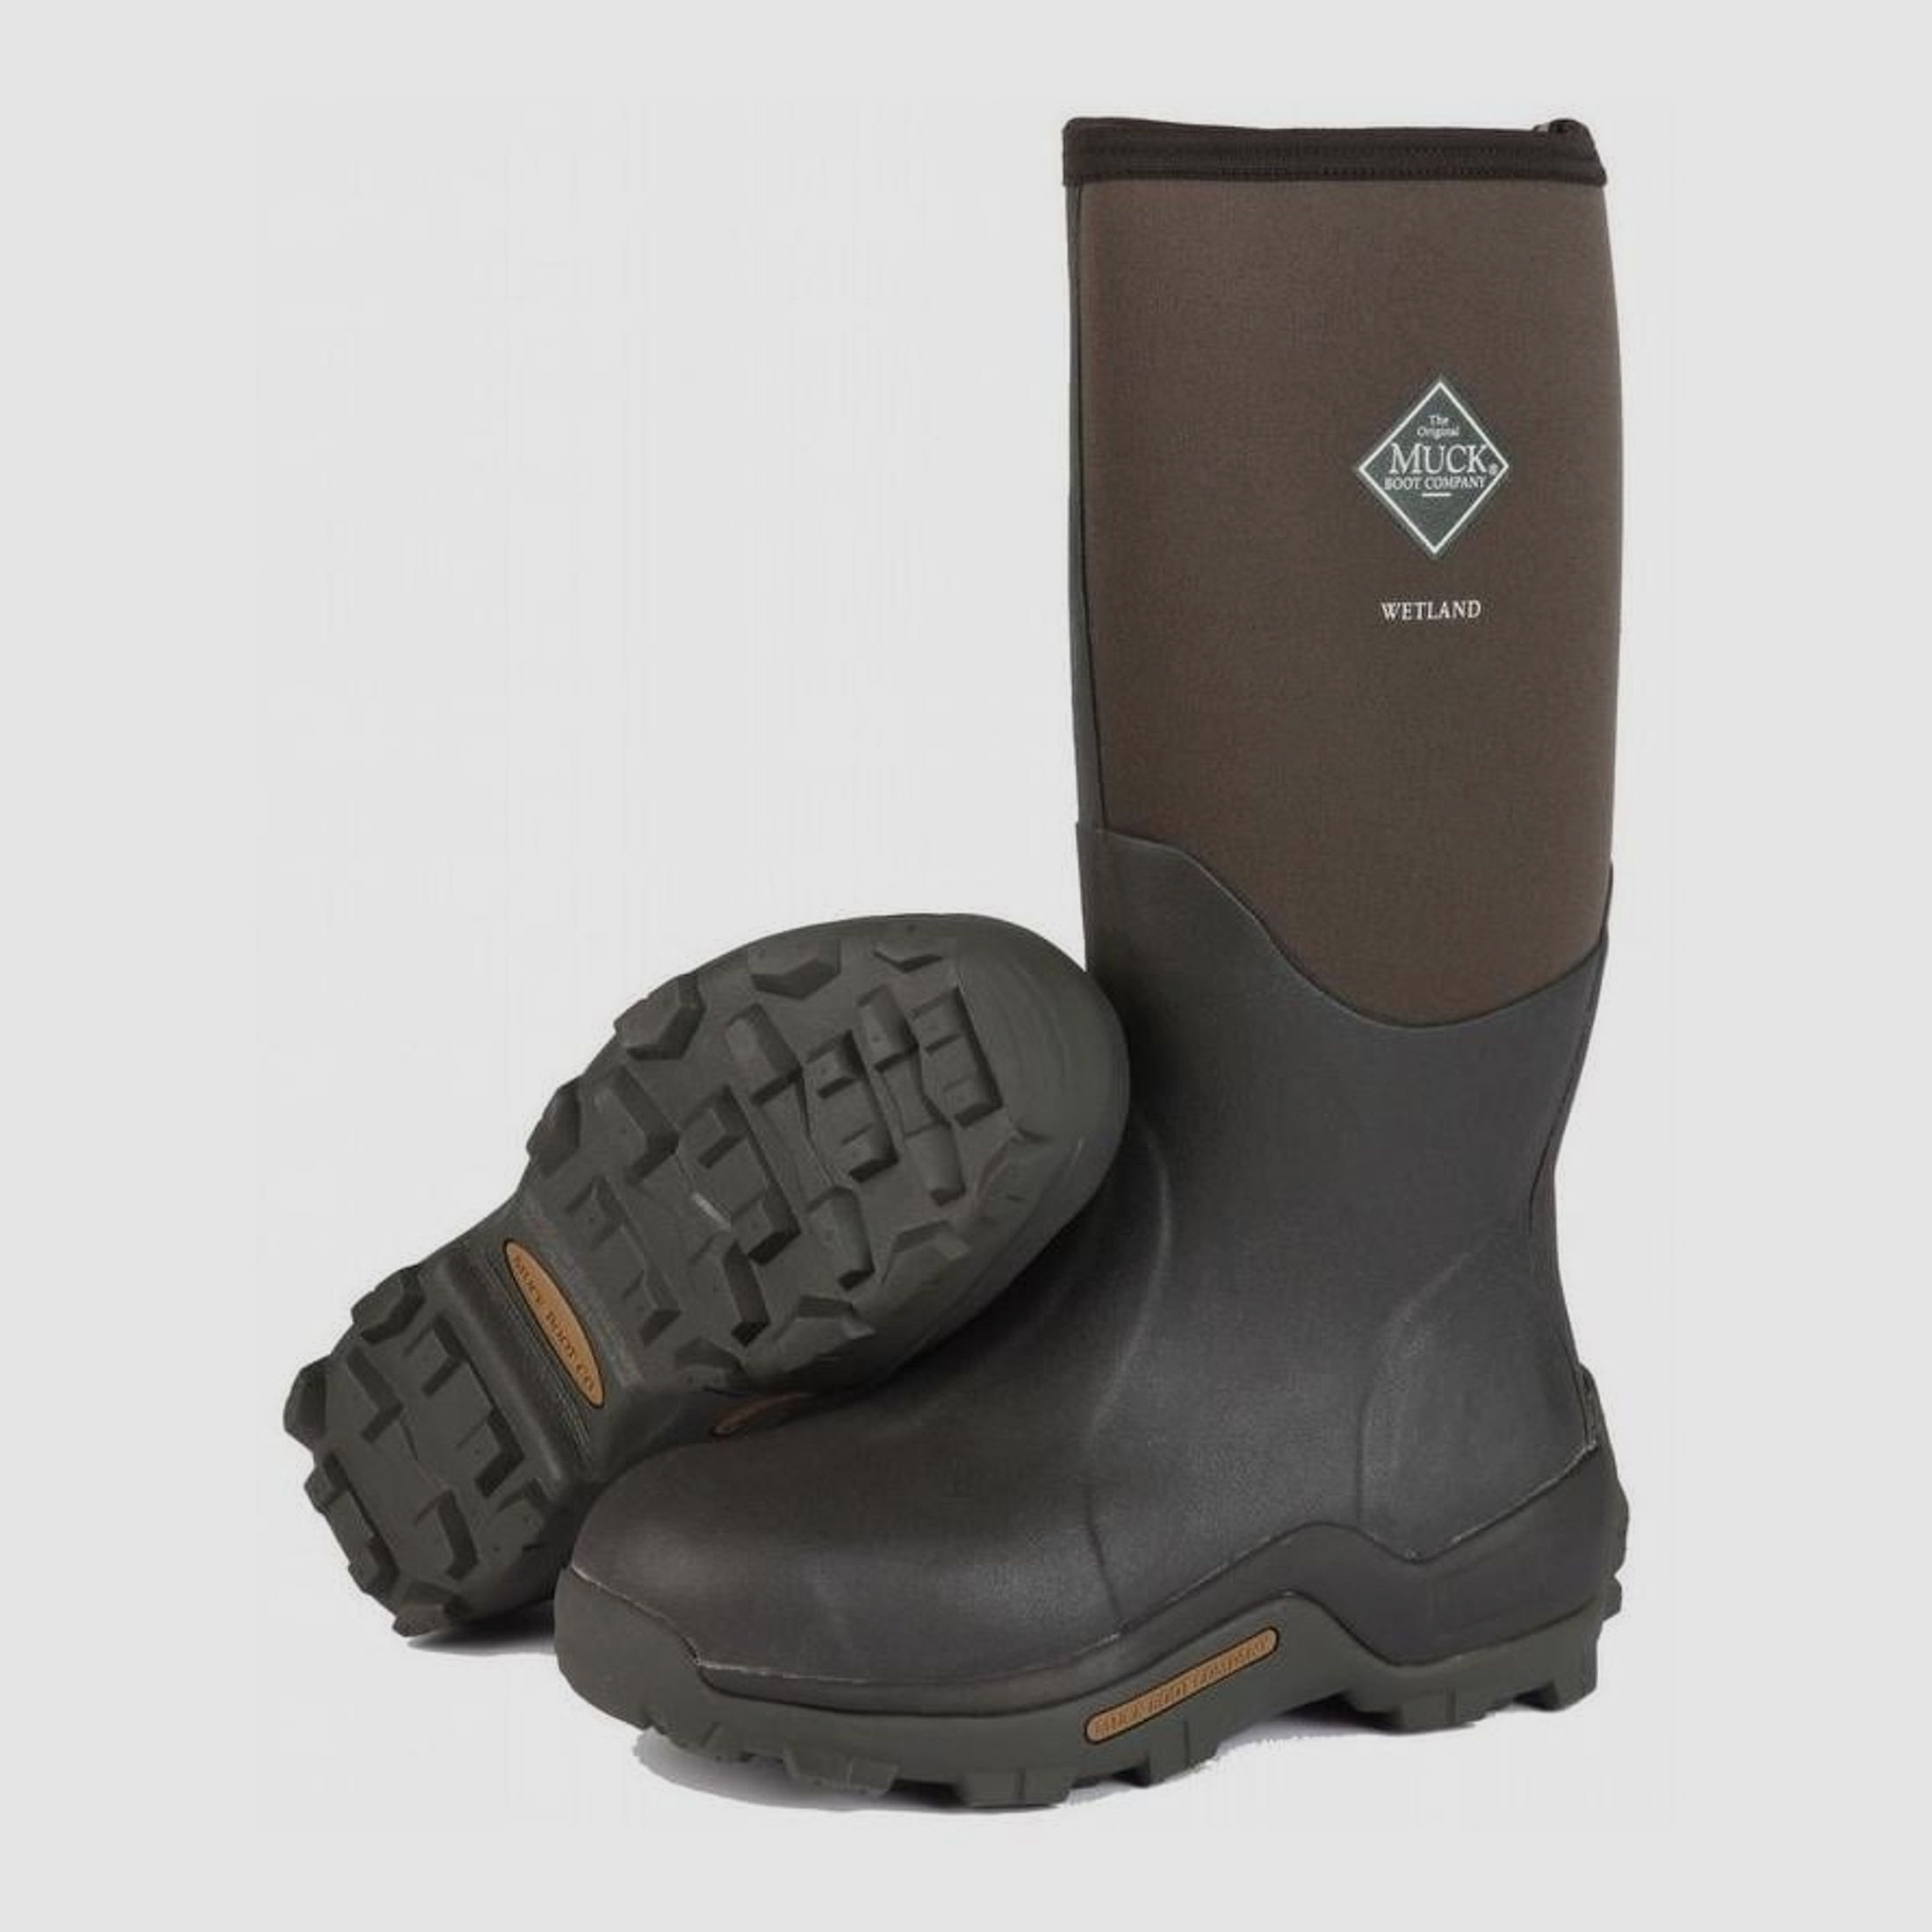 The Original Muck Boot Company Gummistiefel Unisex Wetland Braun    41